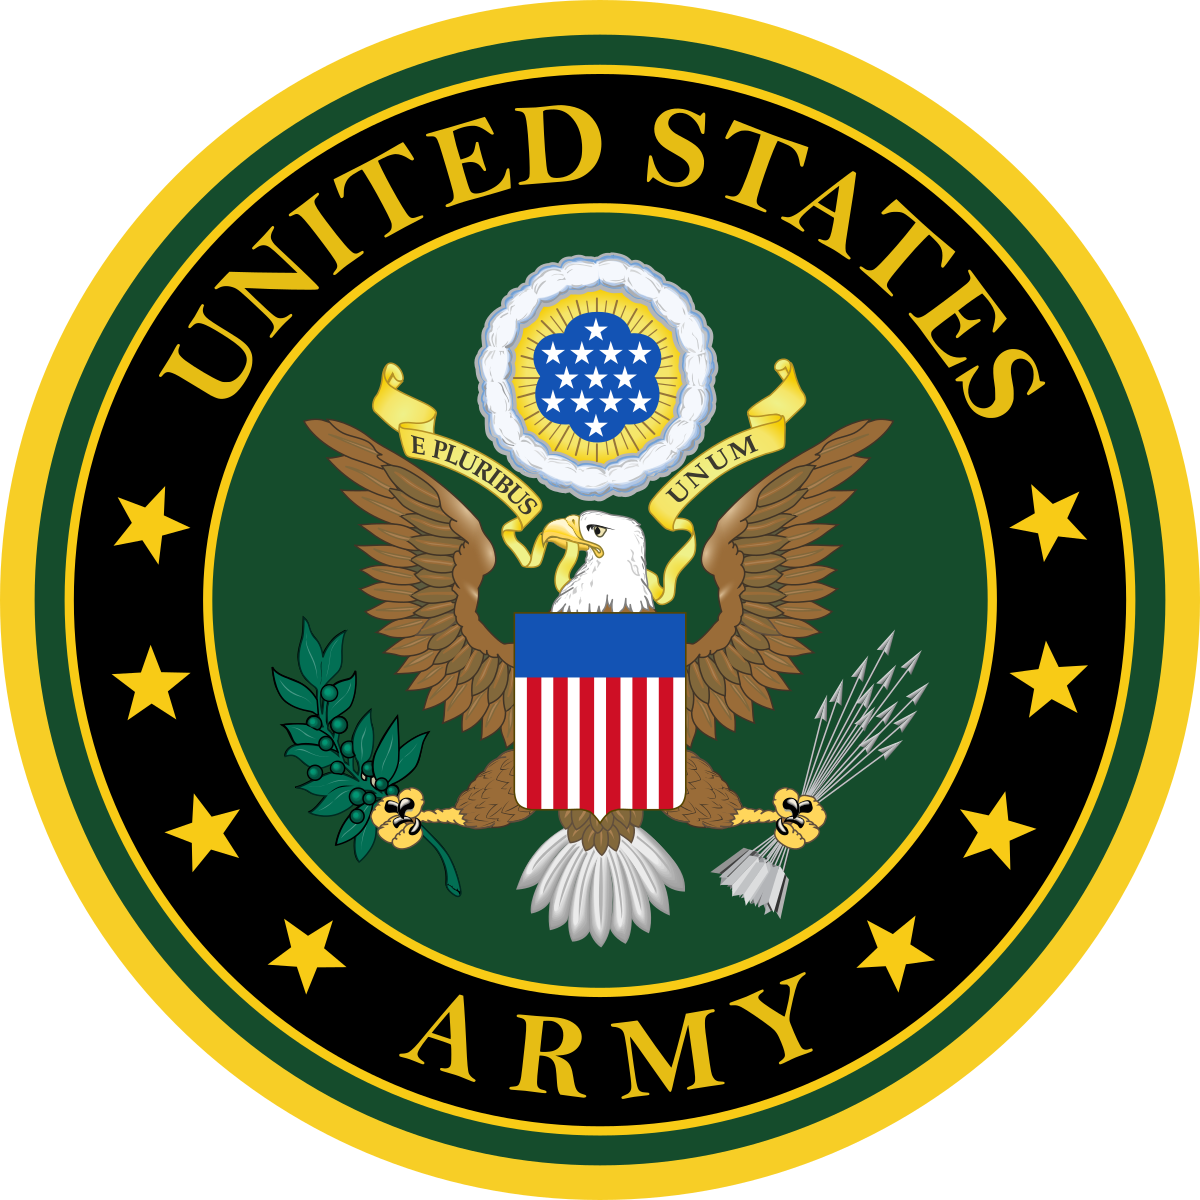 United States Army - Wikipedia